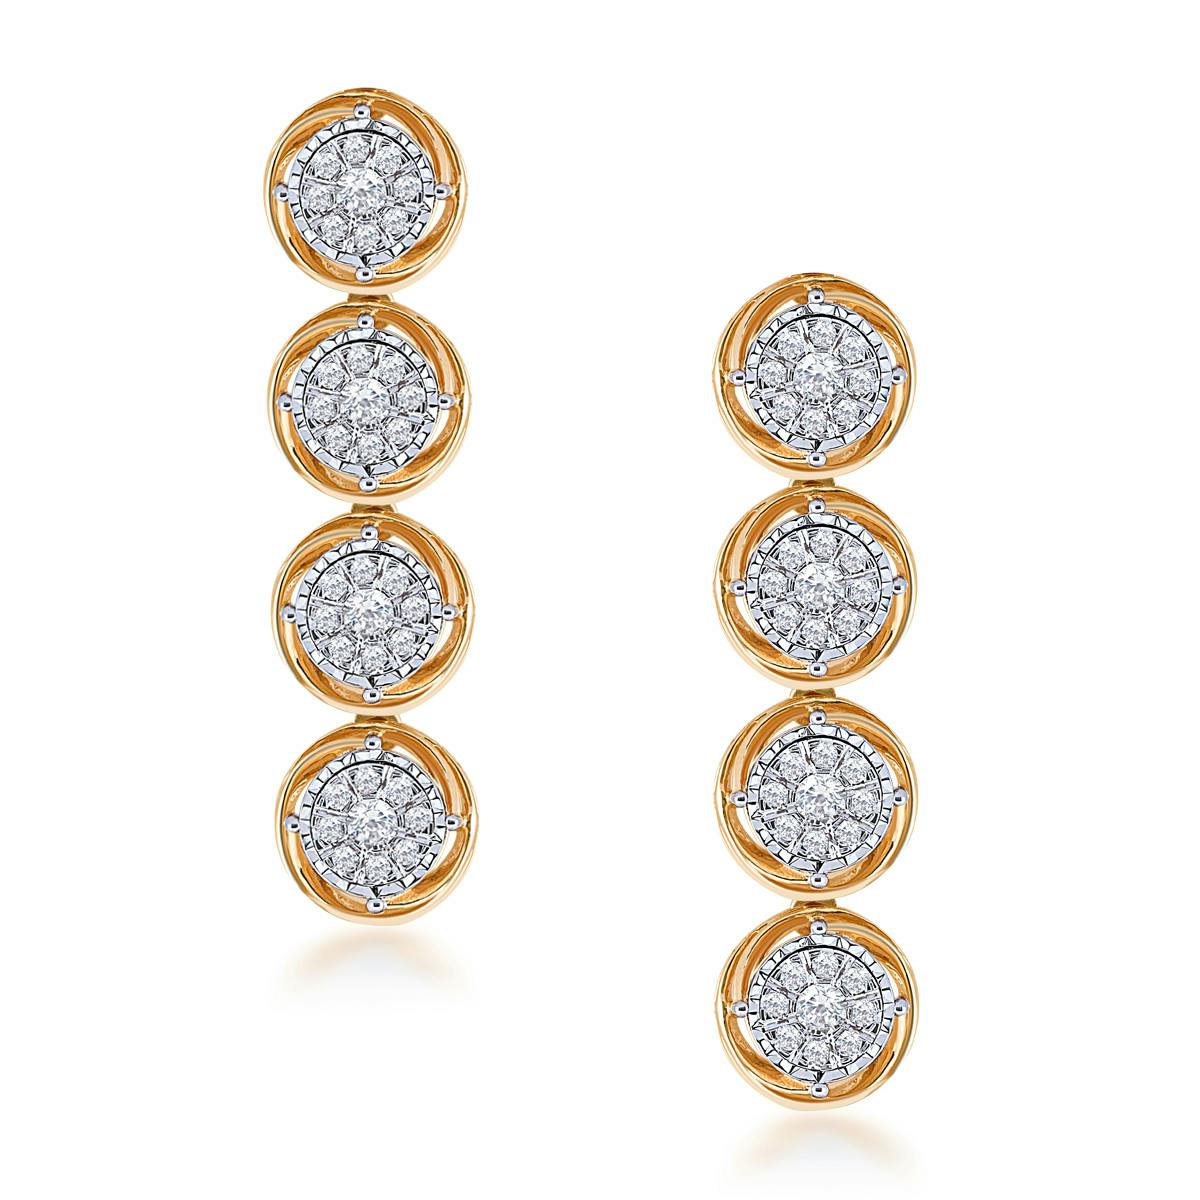 Mosaic diamond necklace earrings